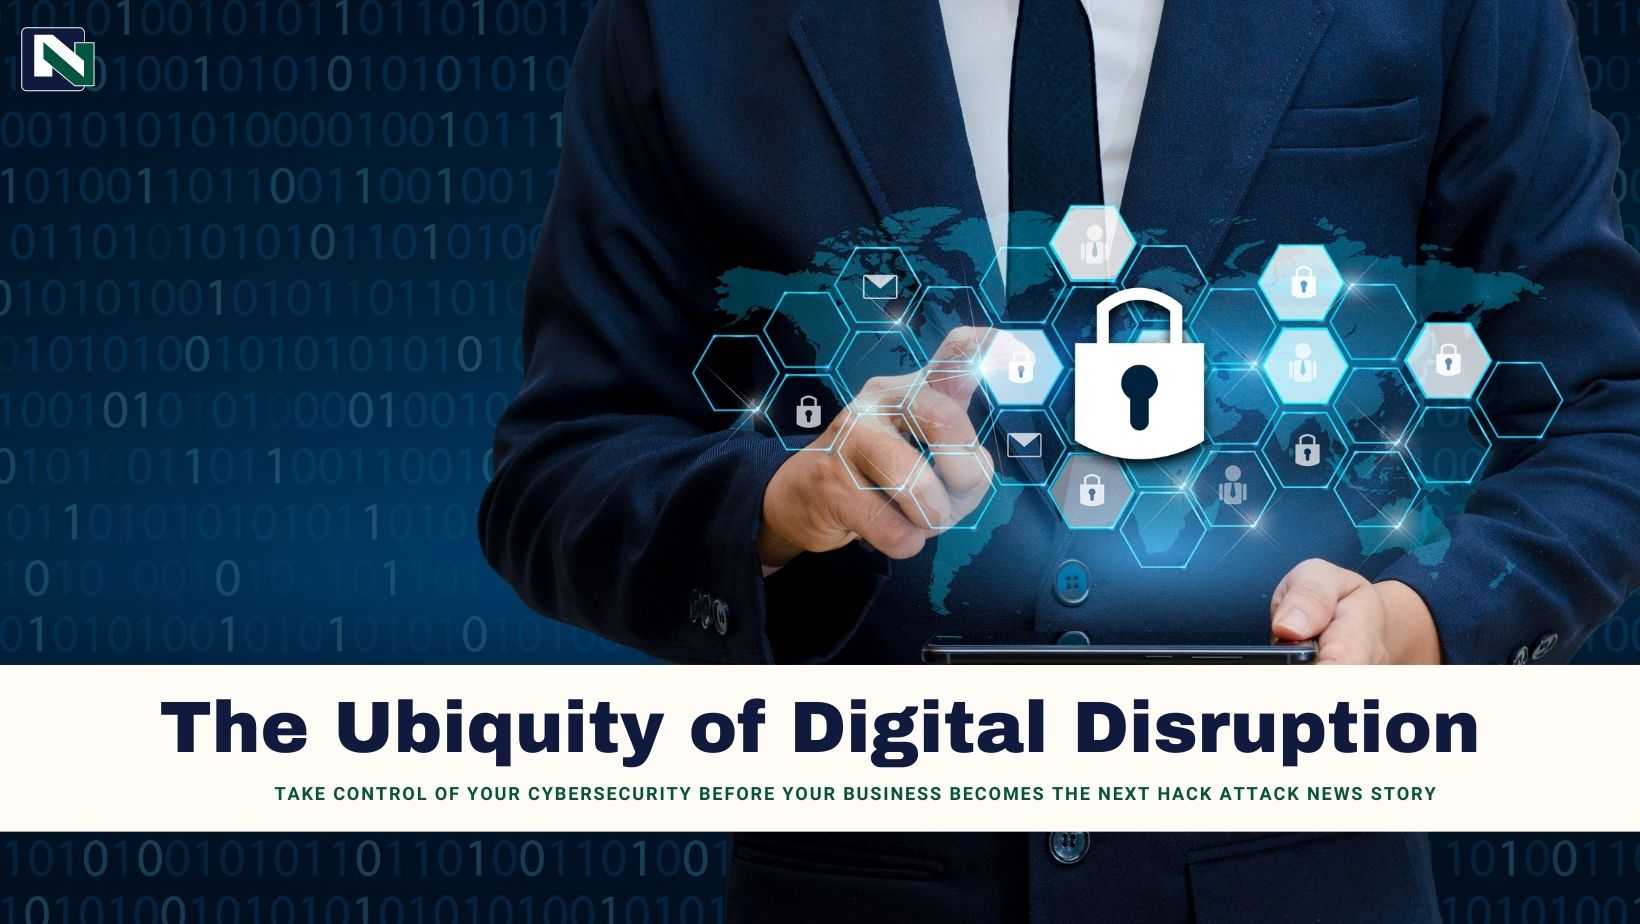 The ubiquity of Digital Disruption